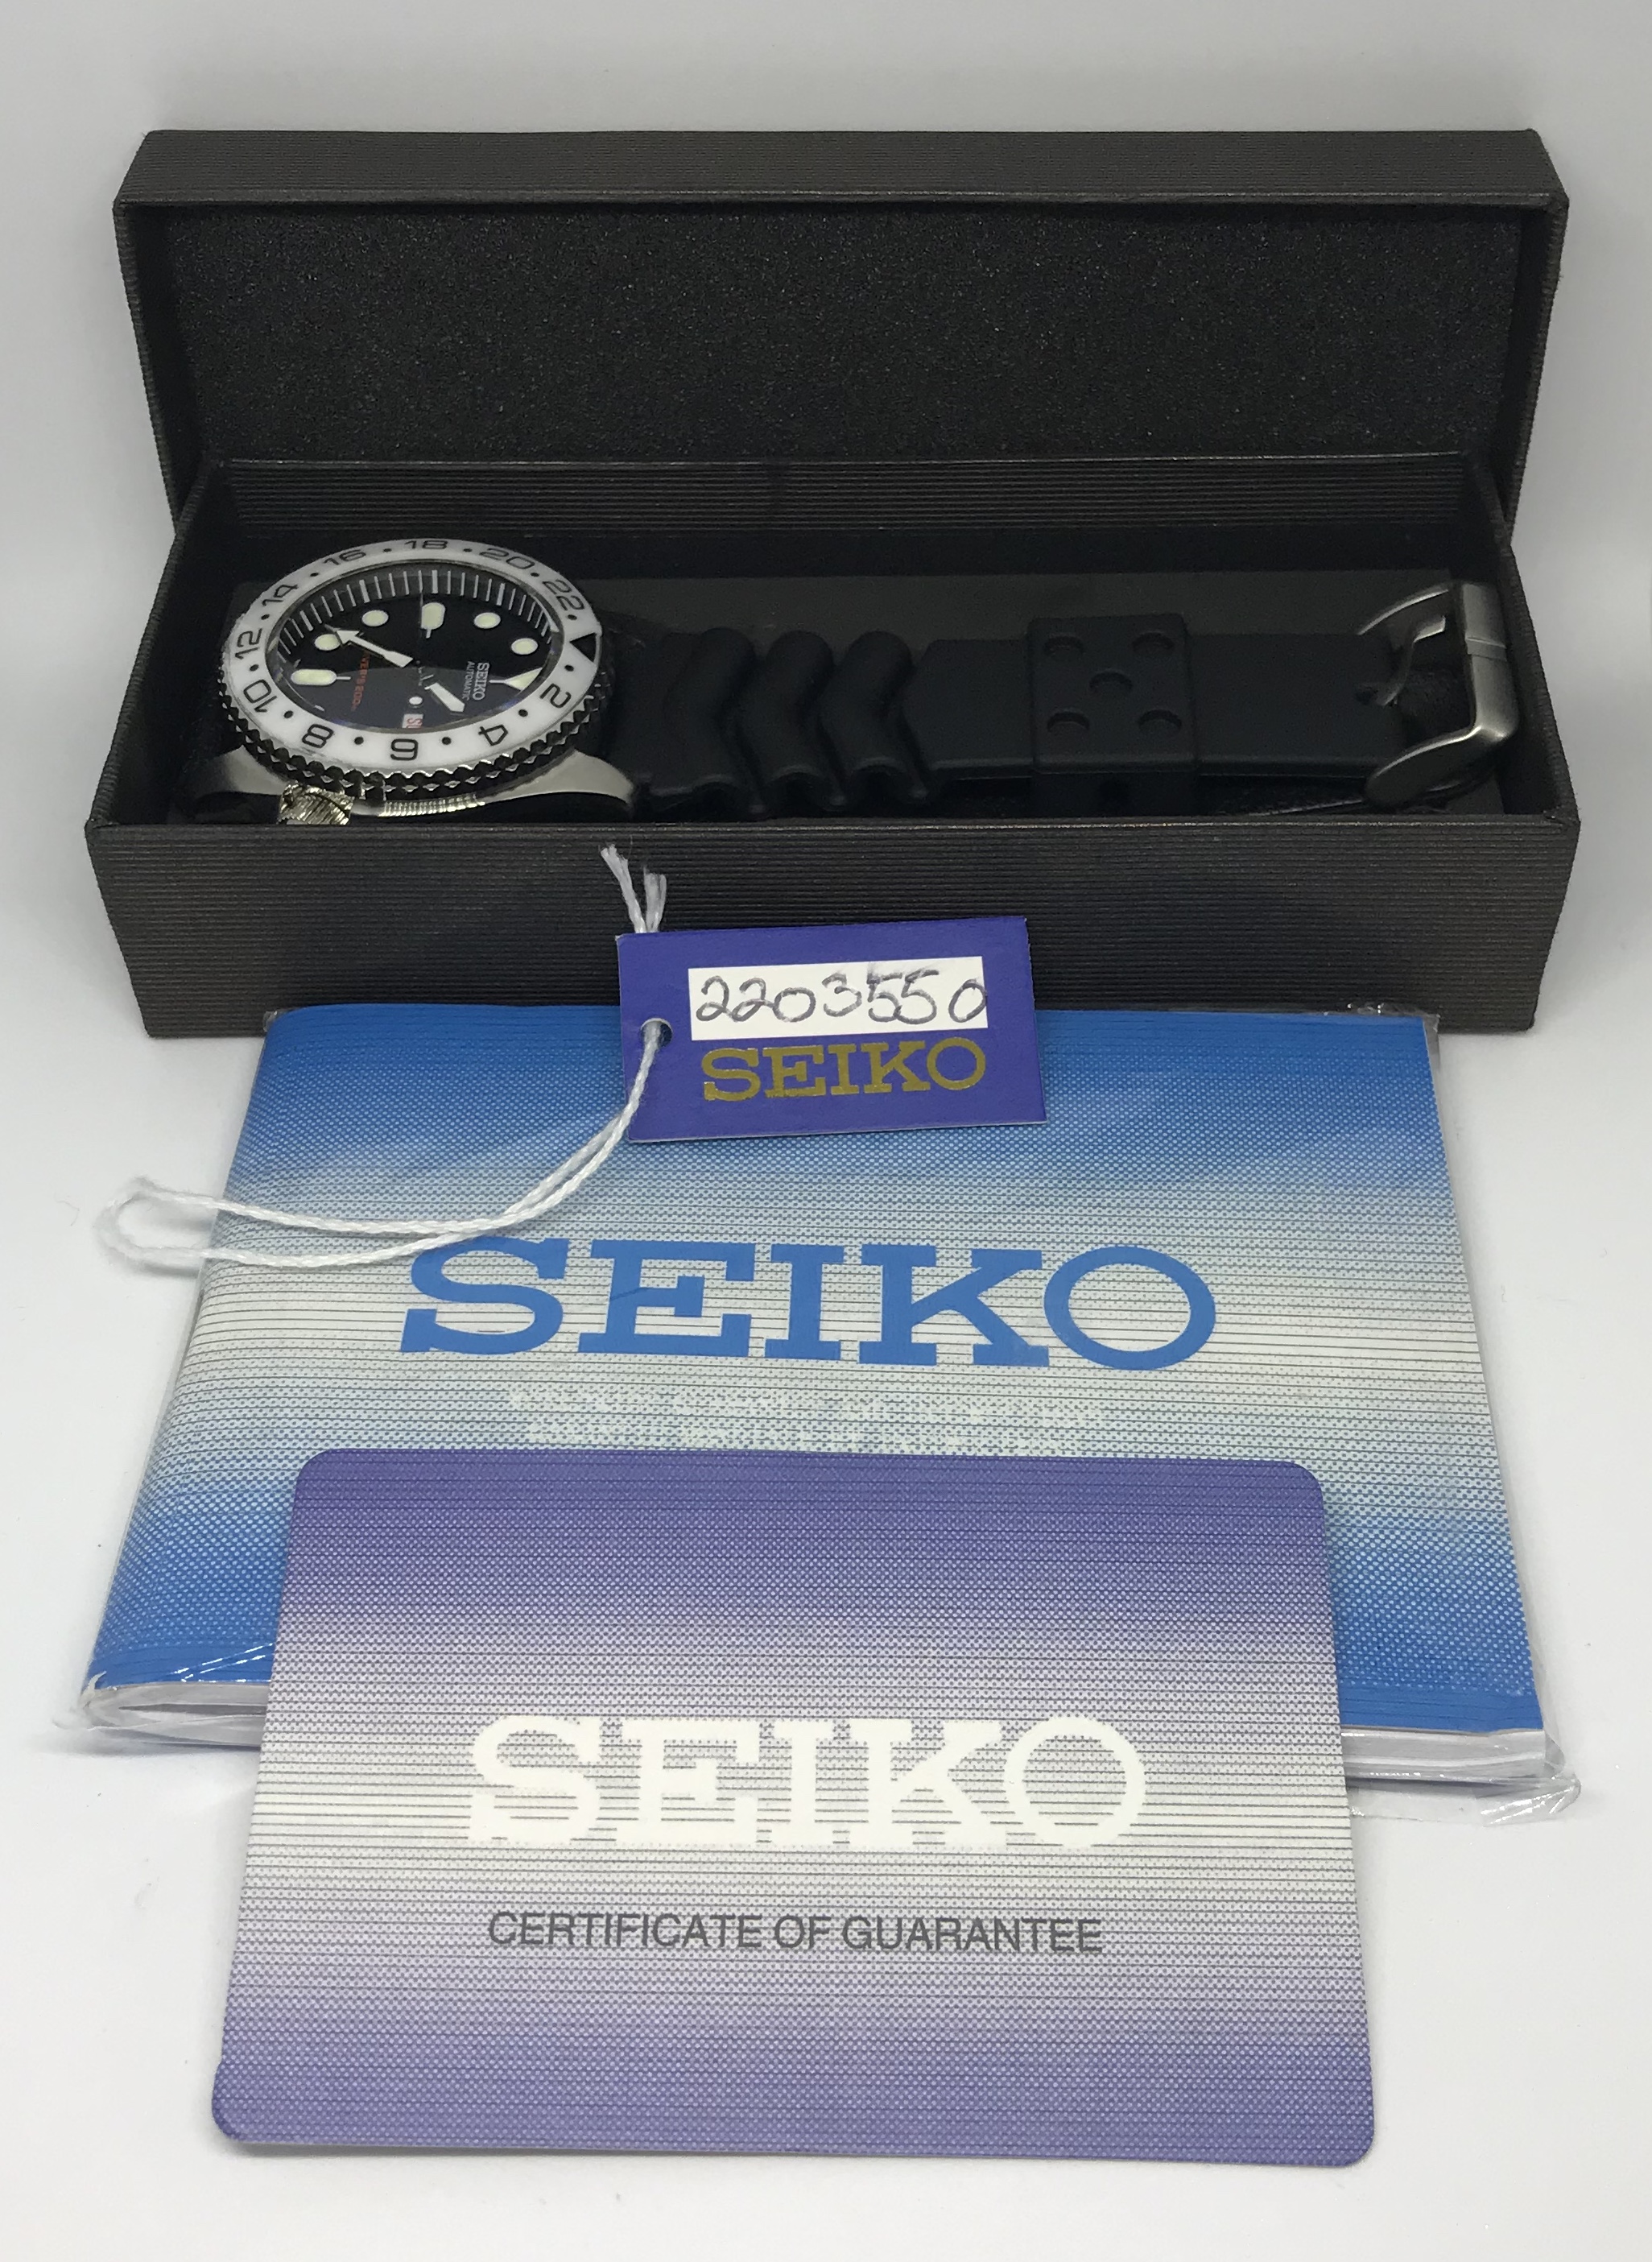 NEW Seiko SKX009 Automatic (Ltd ÒGHOSTÓ Edition) 12 Month Guarantee - Image 10 of 11